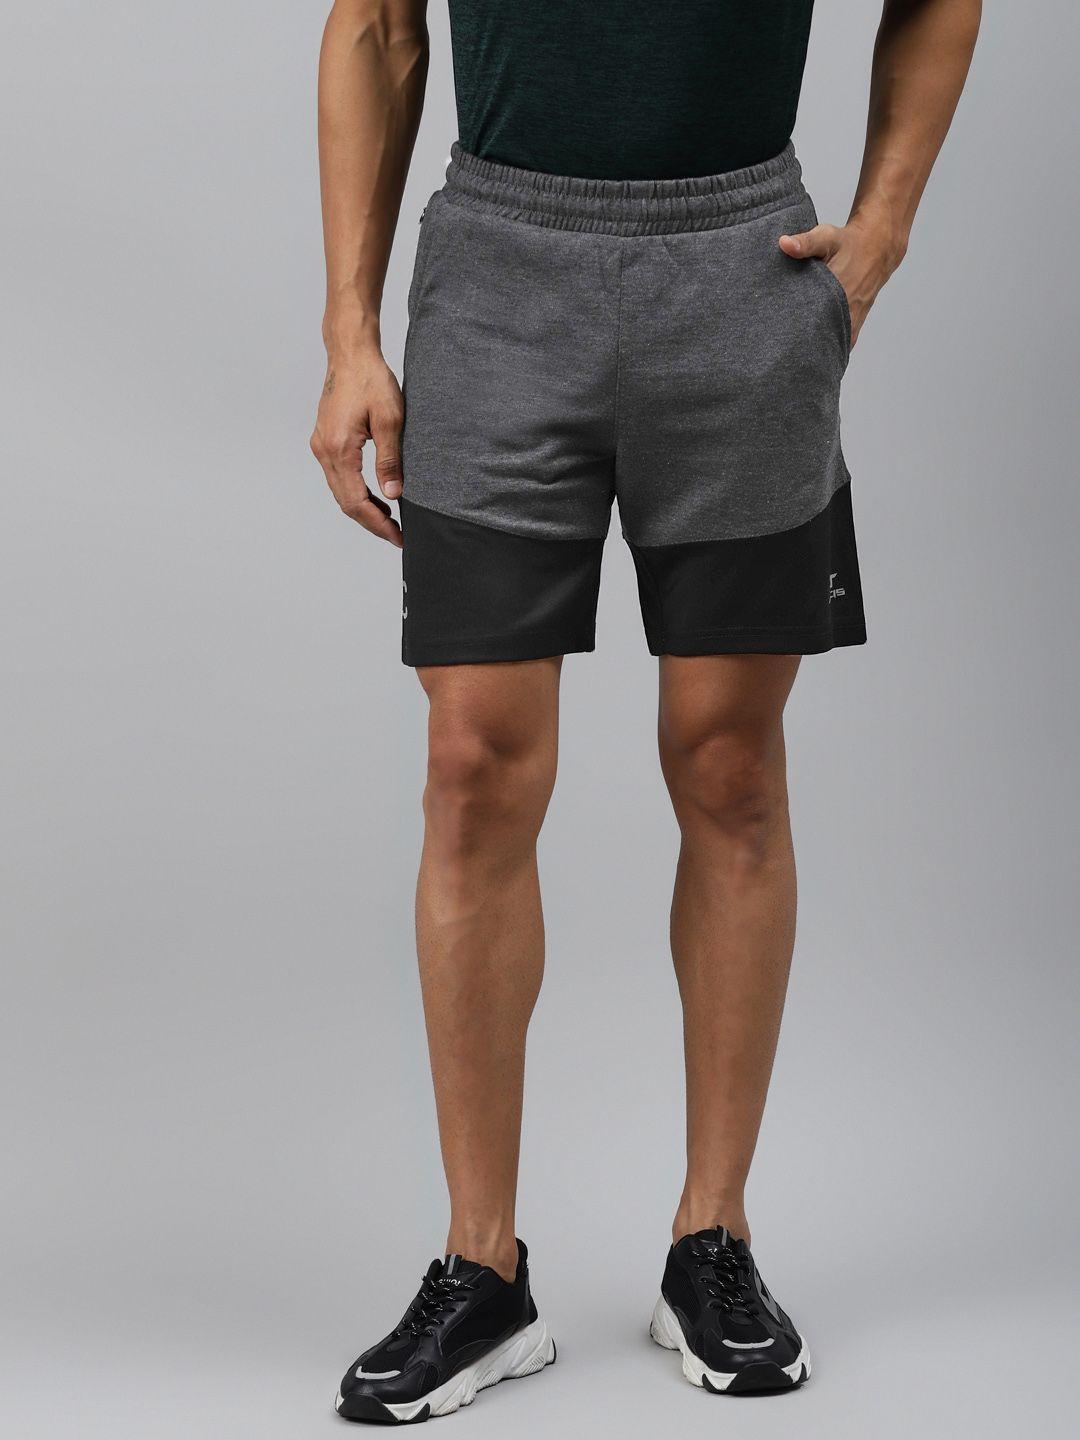 alcis men black & charcoal grey colourblocked slim fit sports shorts